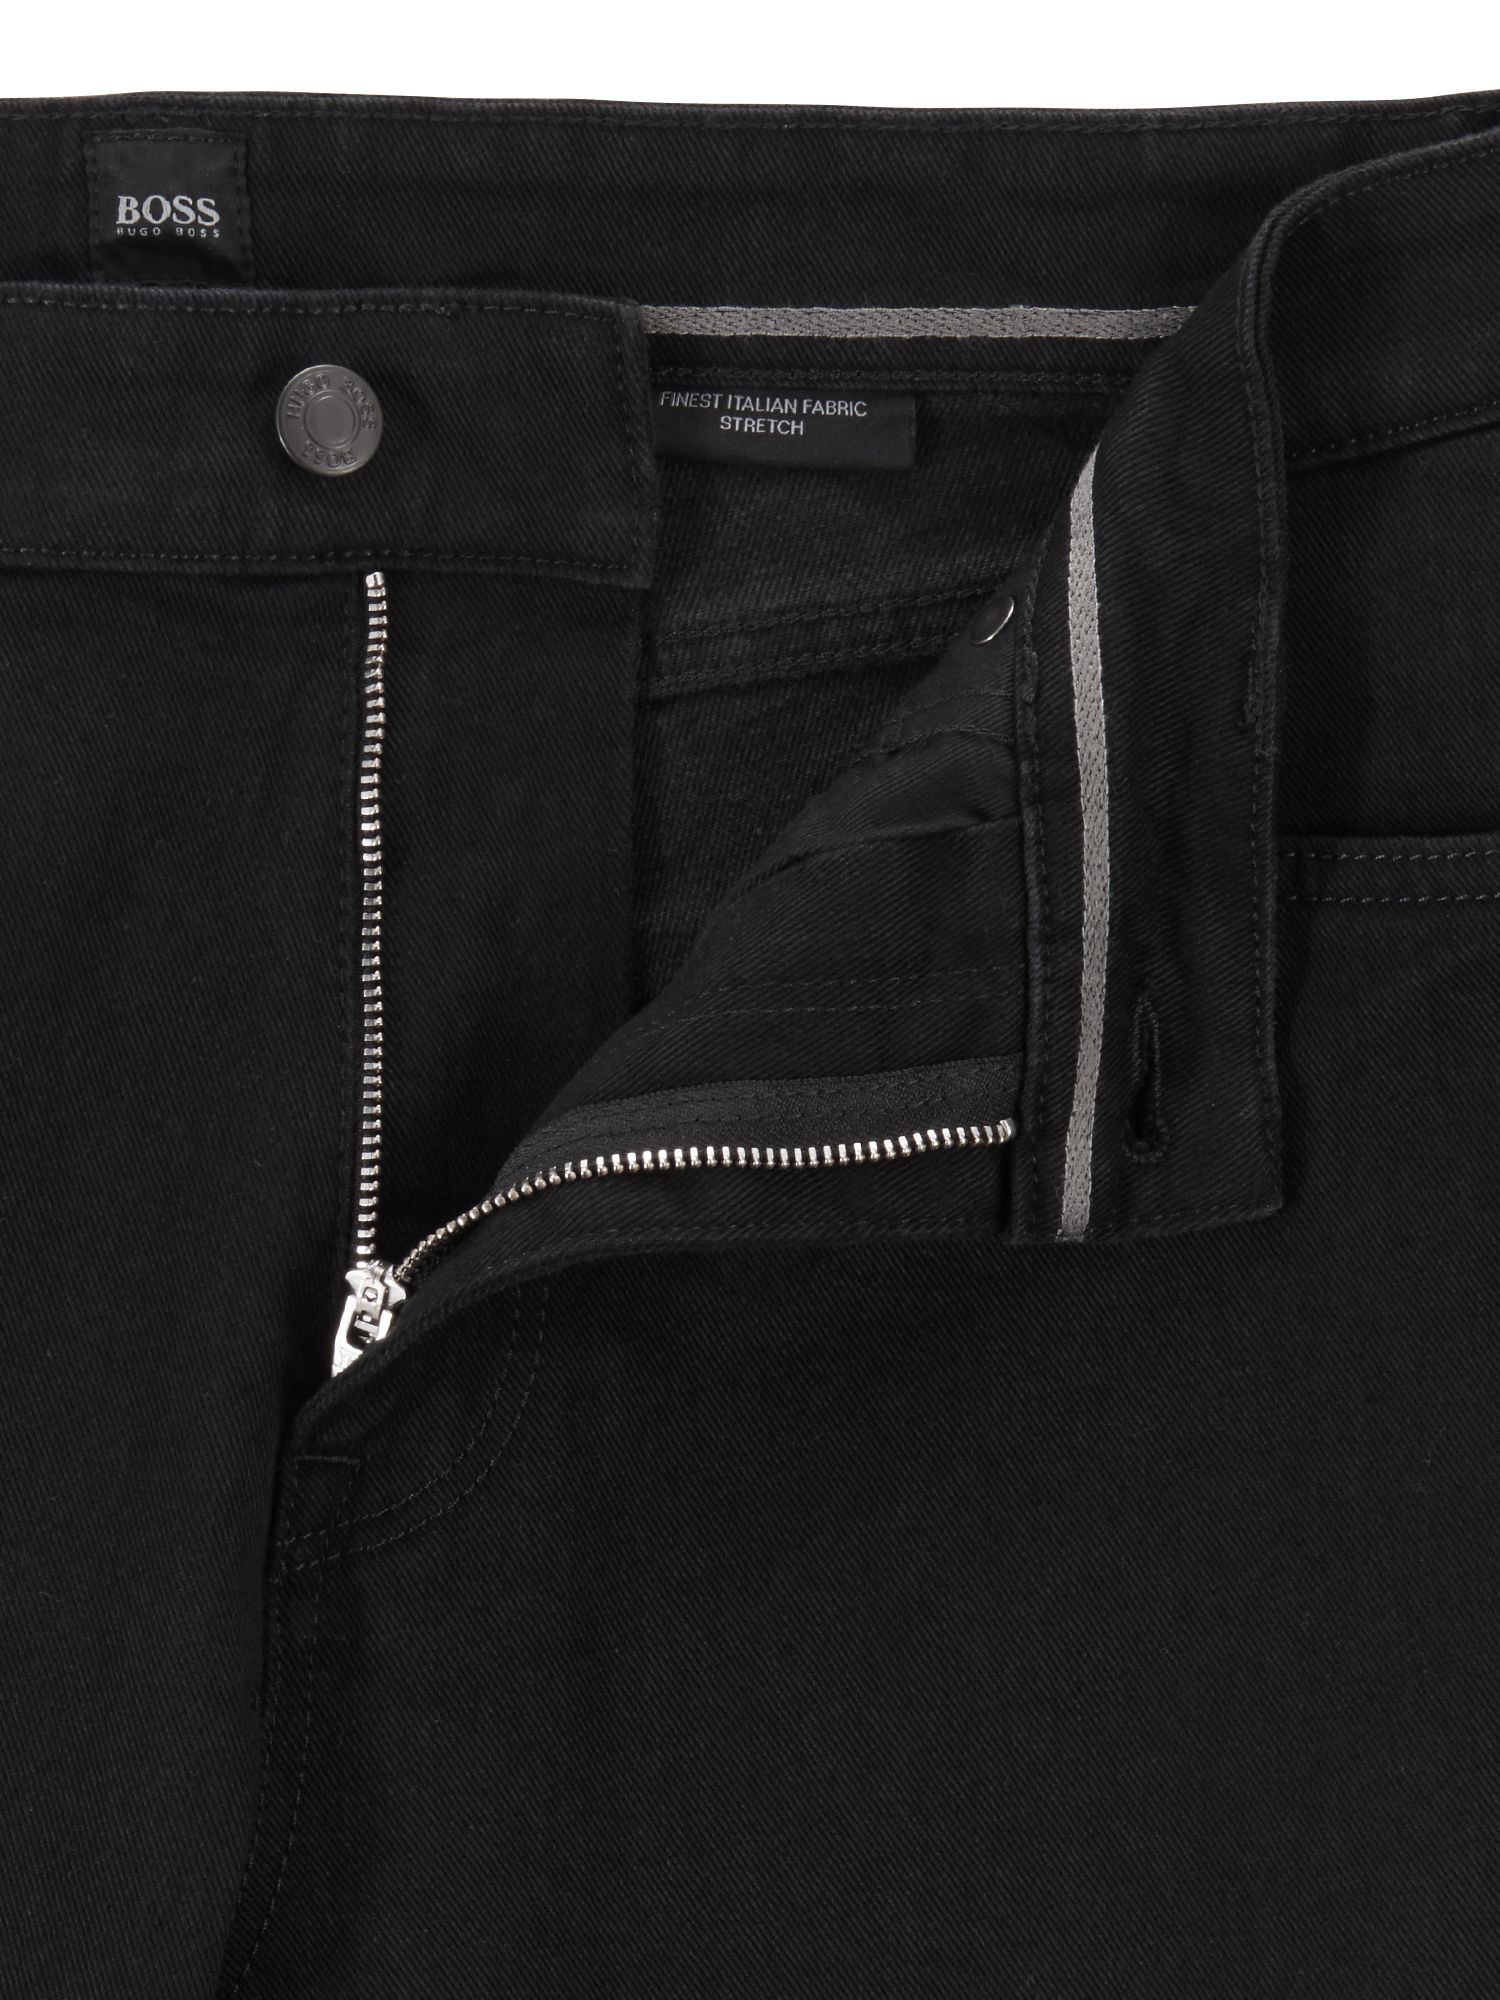 BOSS Maine Regular Fit Jeans, Black John Lewis & Partners